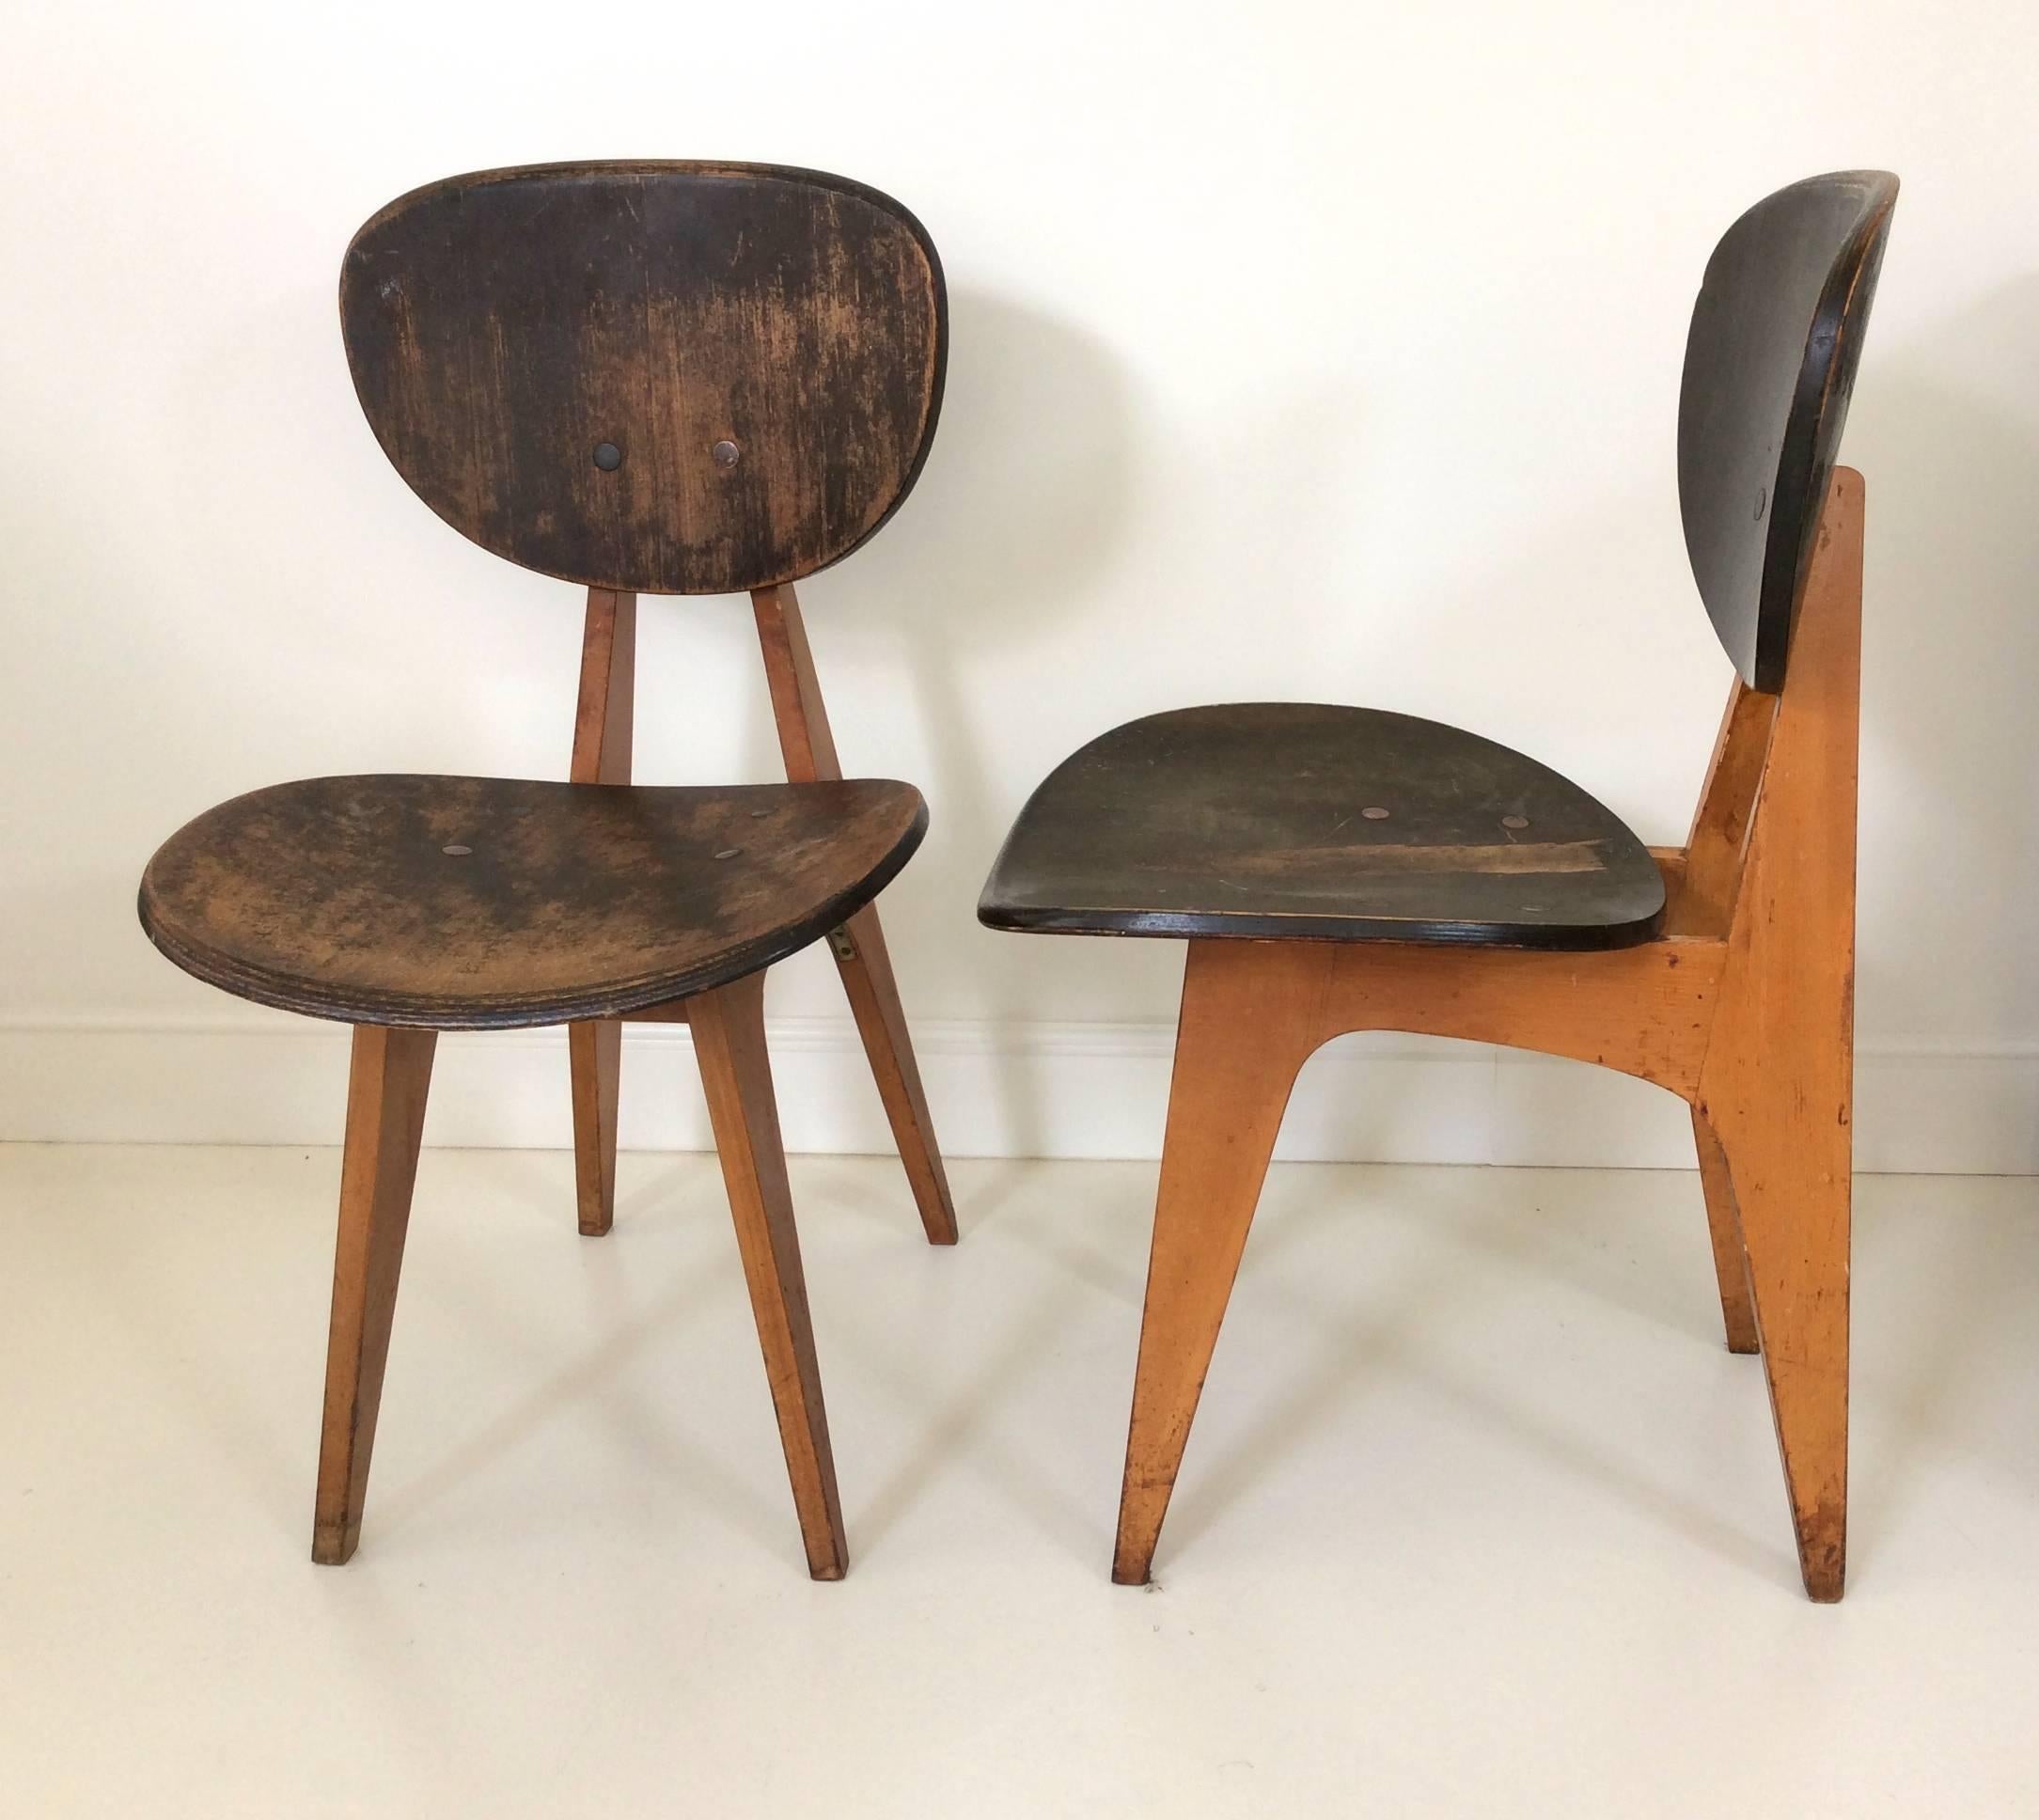 Painted Pair of Original 1960 Chairs by Daisaku Choh, Japan